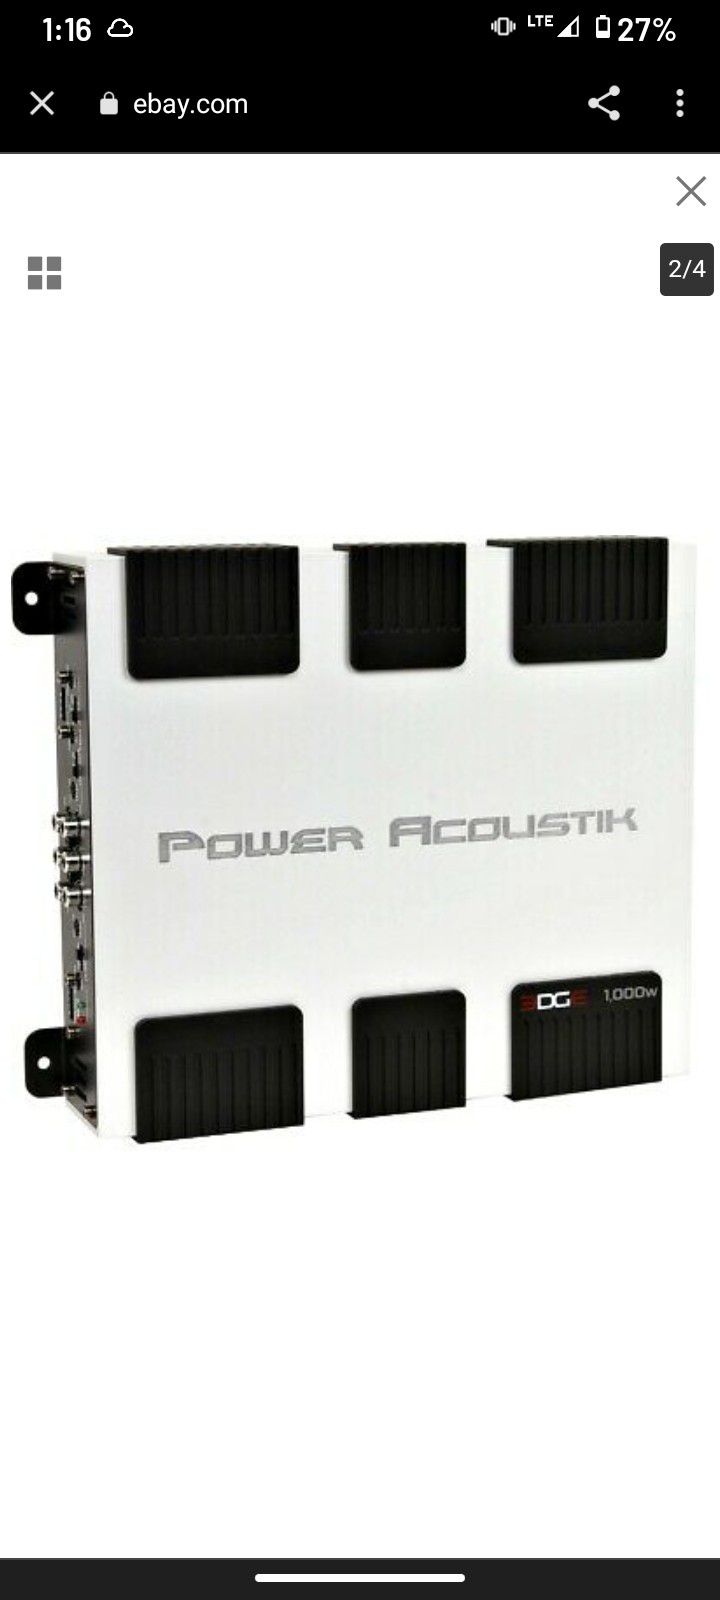 Power Acoustik Amplifier

